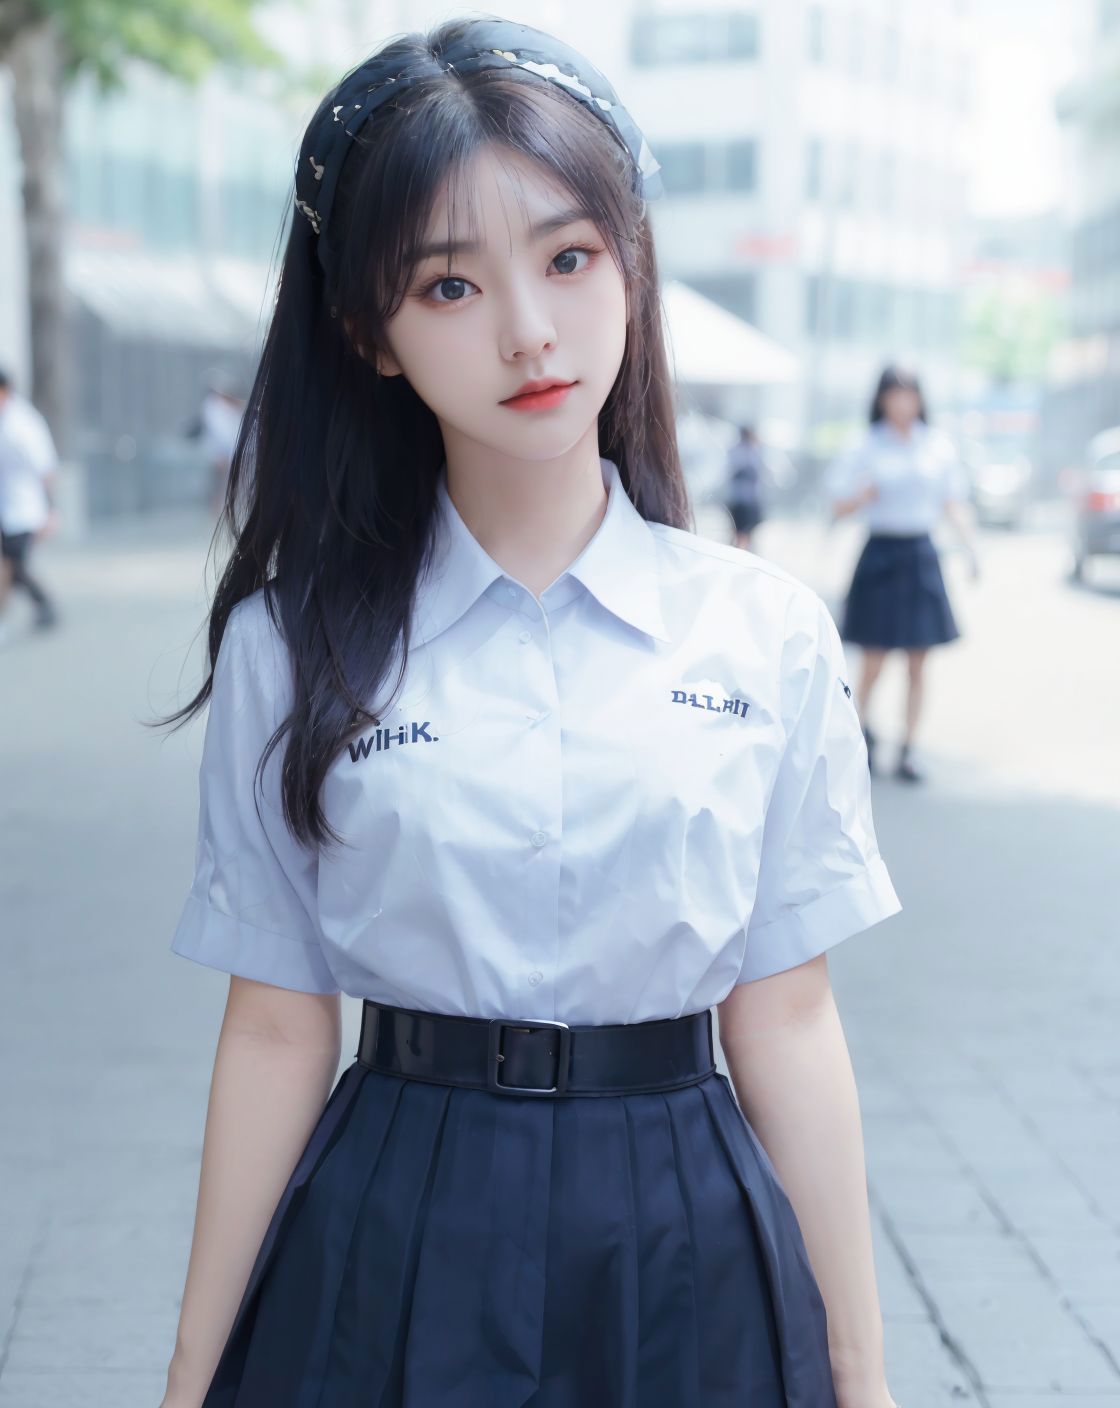 Thai High school uniform image by HiFidelity